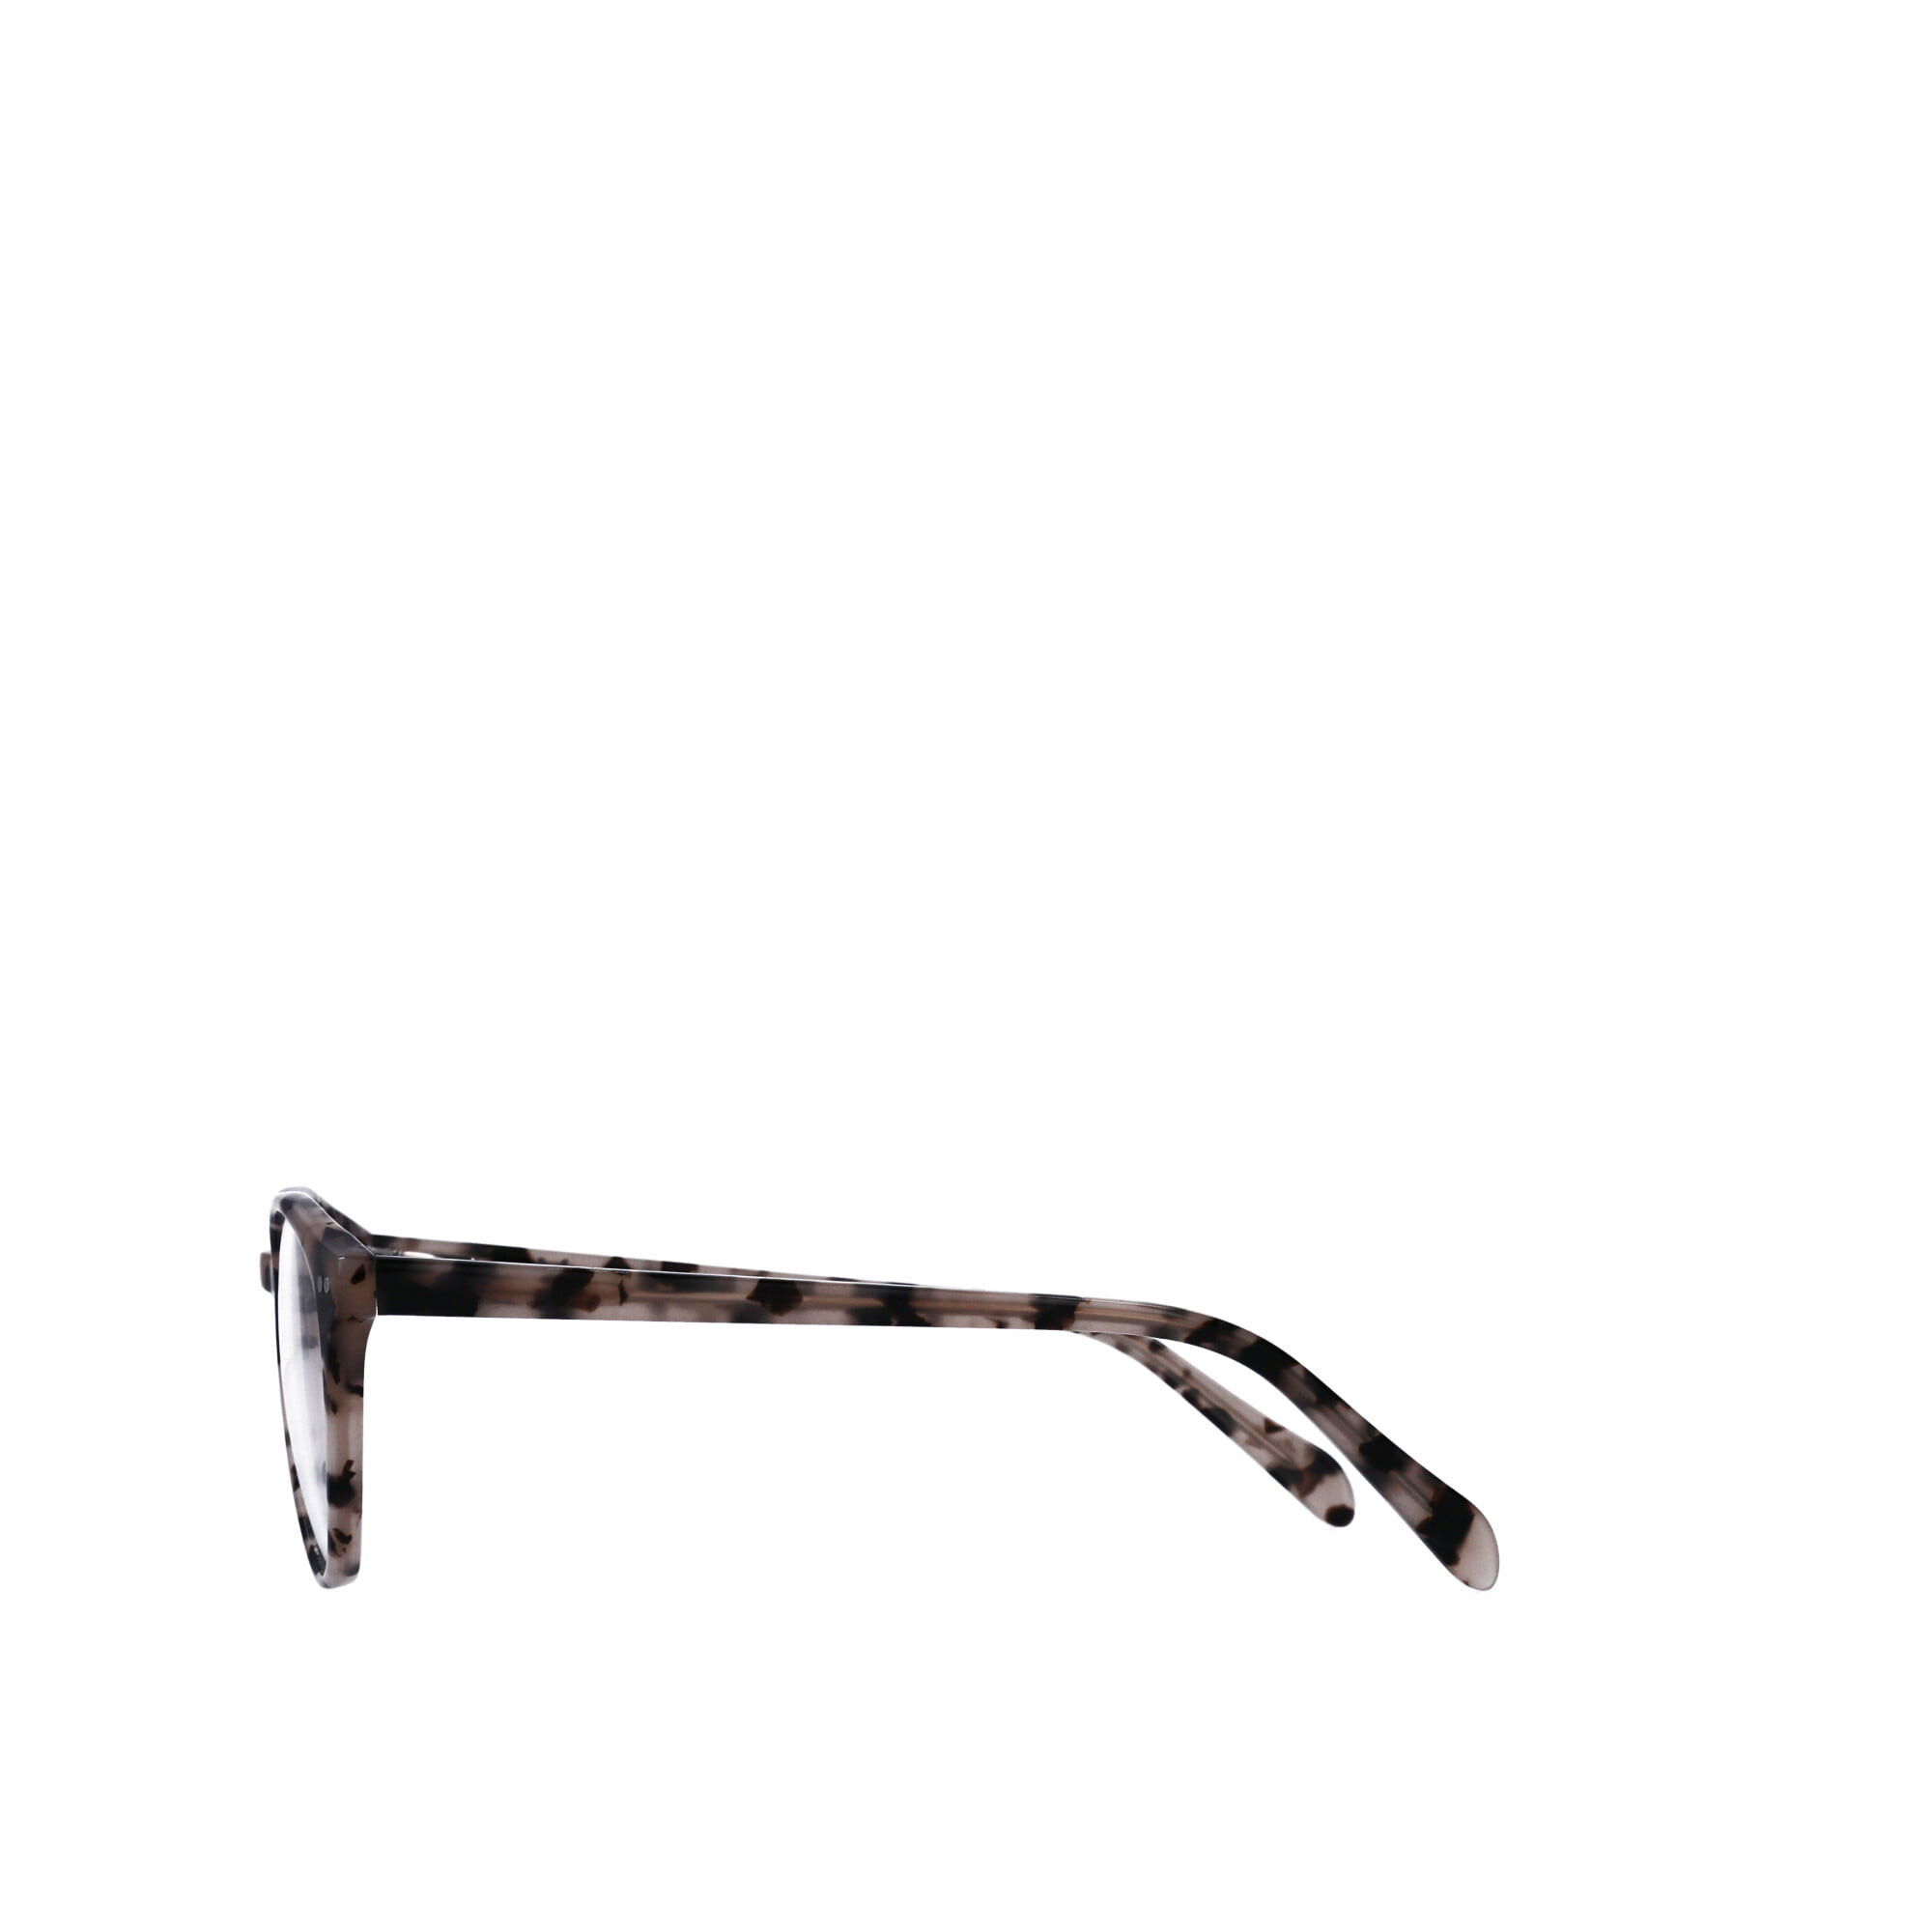 Progressive Eyeglasses Online with Largefit, Square, Full-Rim Plastic/ Metal Design — Cosmo in Tortoise/black/matte Beige by Eyebuydirect - Lenses